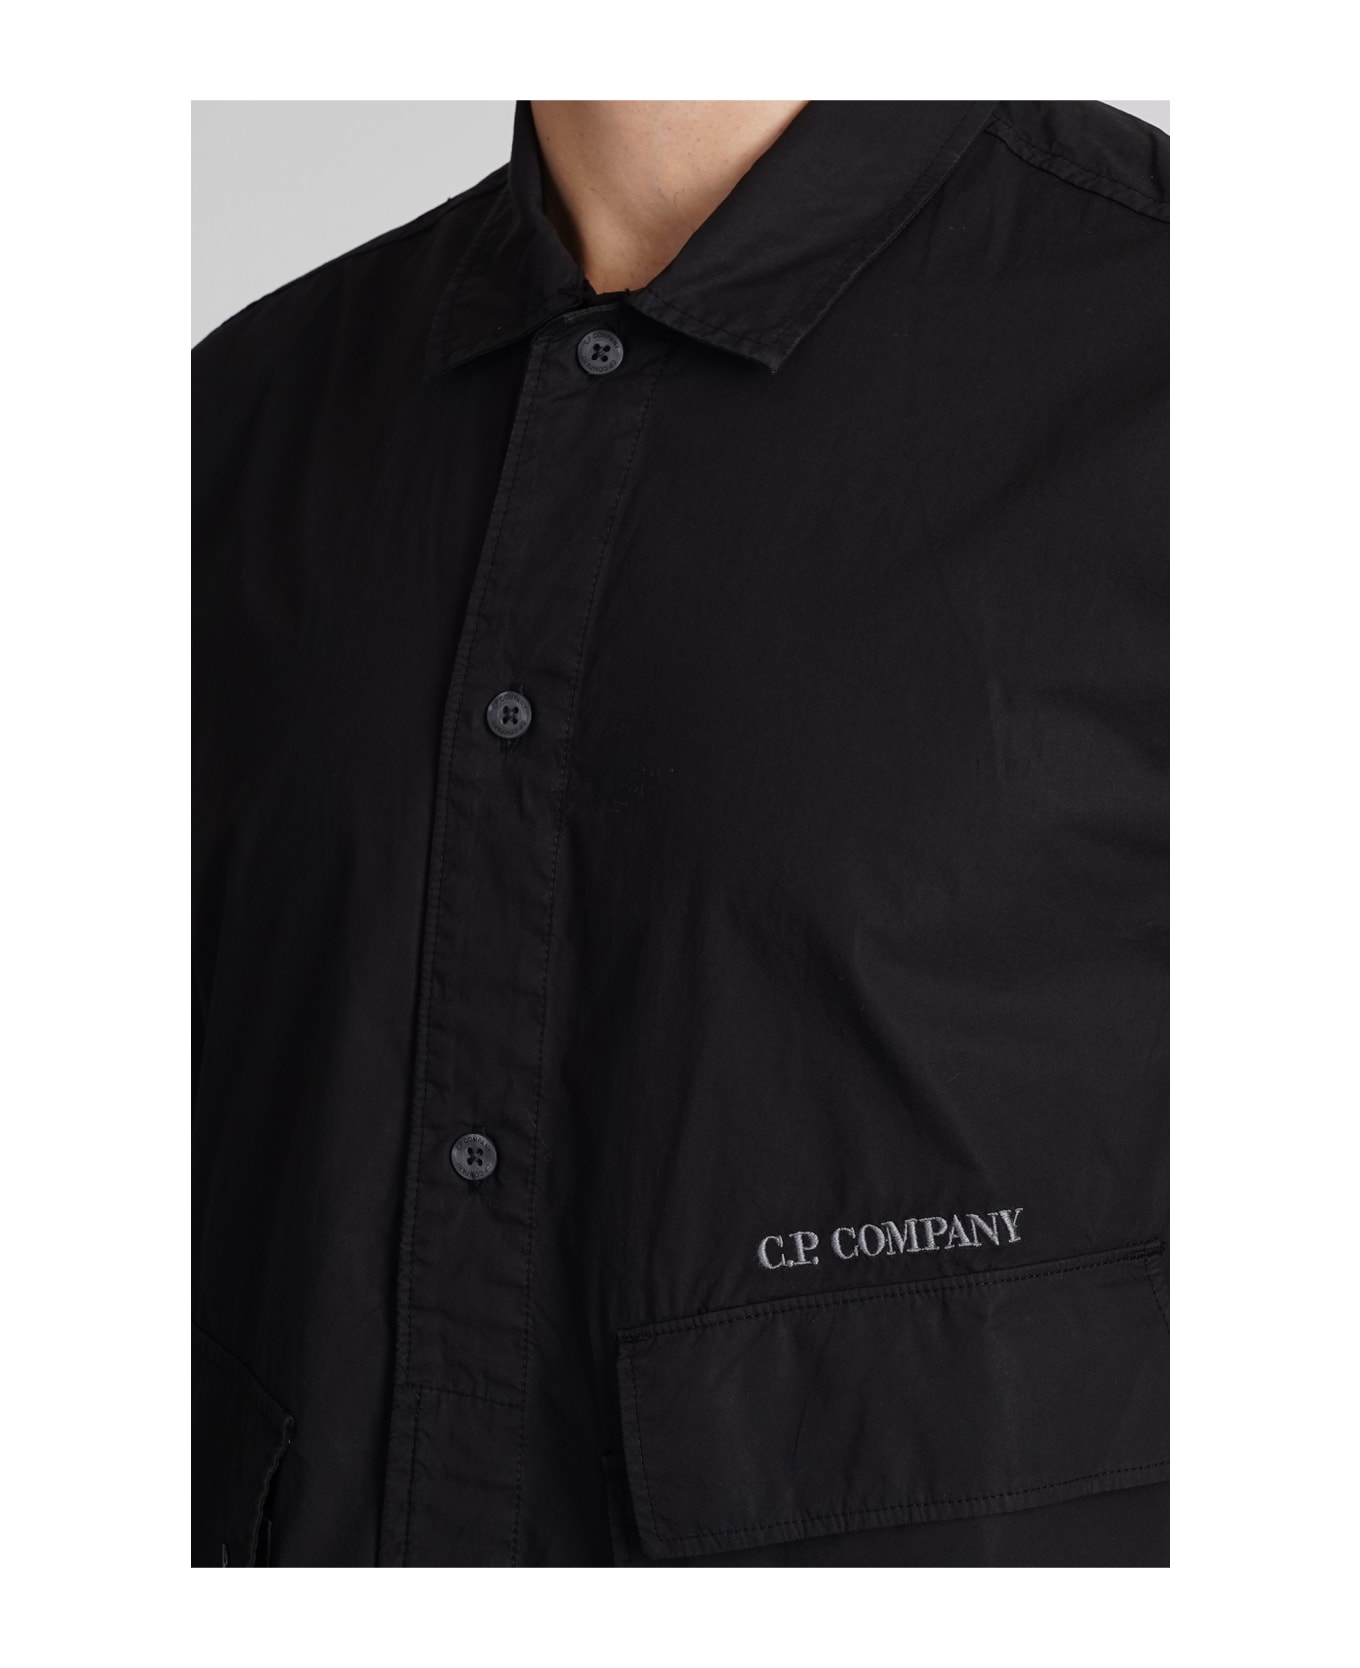 C.P. Company Shirt In Black Cotton - Black